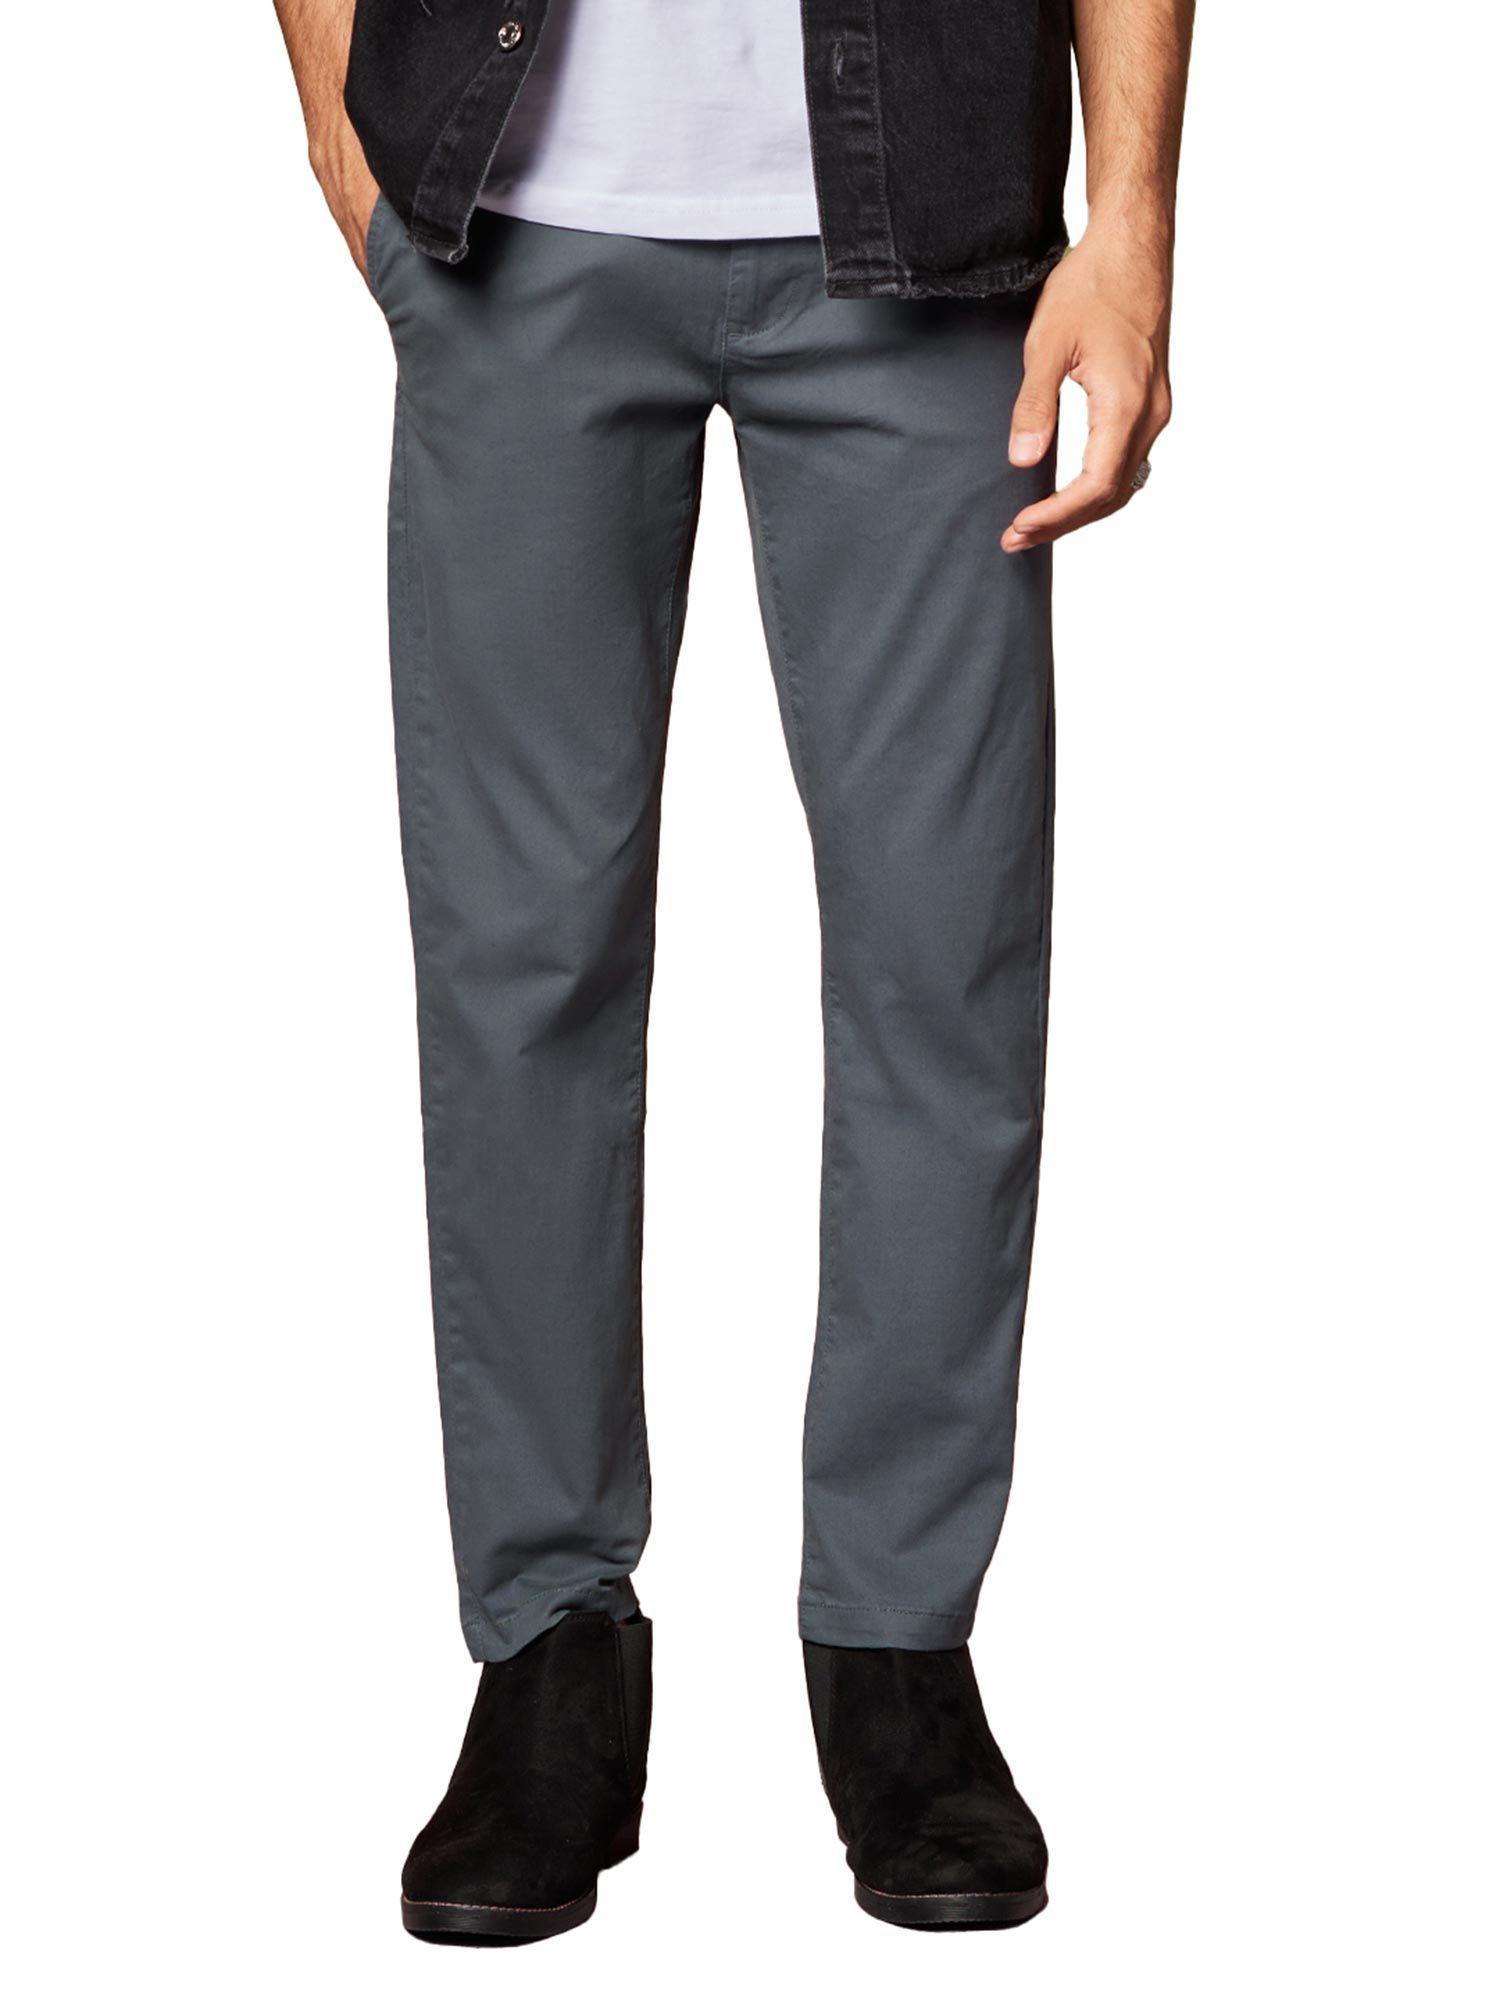 original-solids--dark-grey-chino-pants